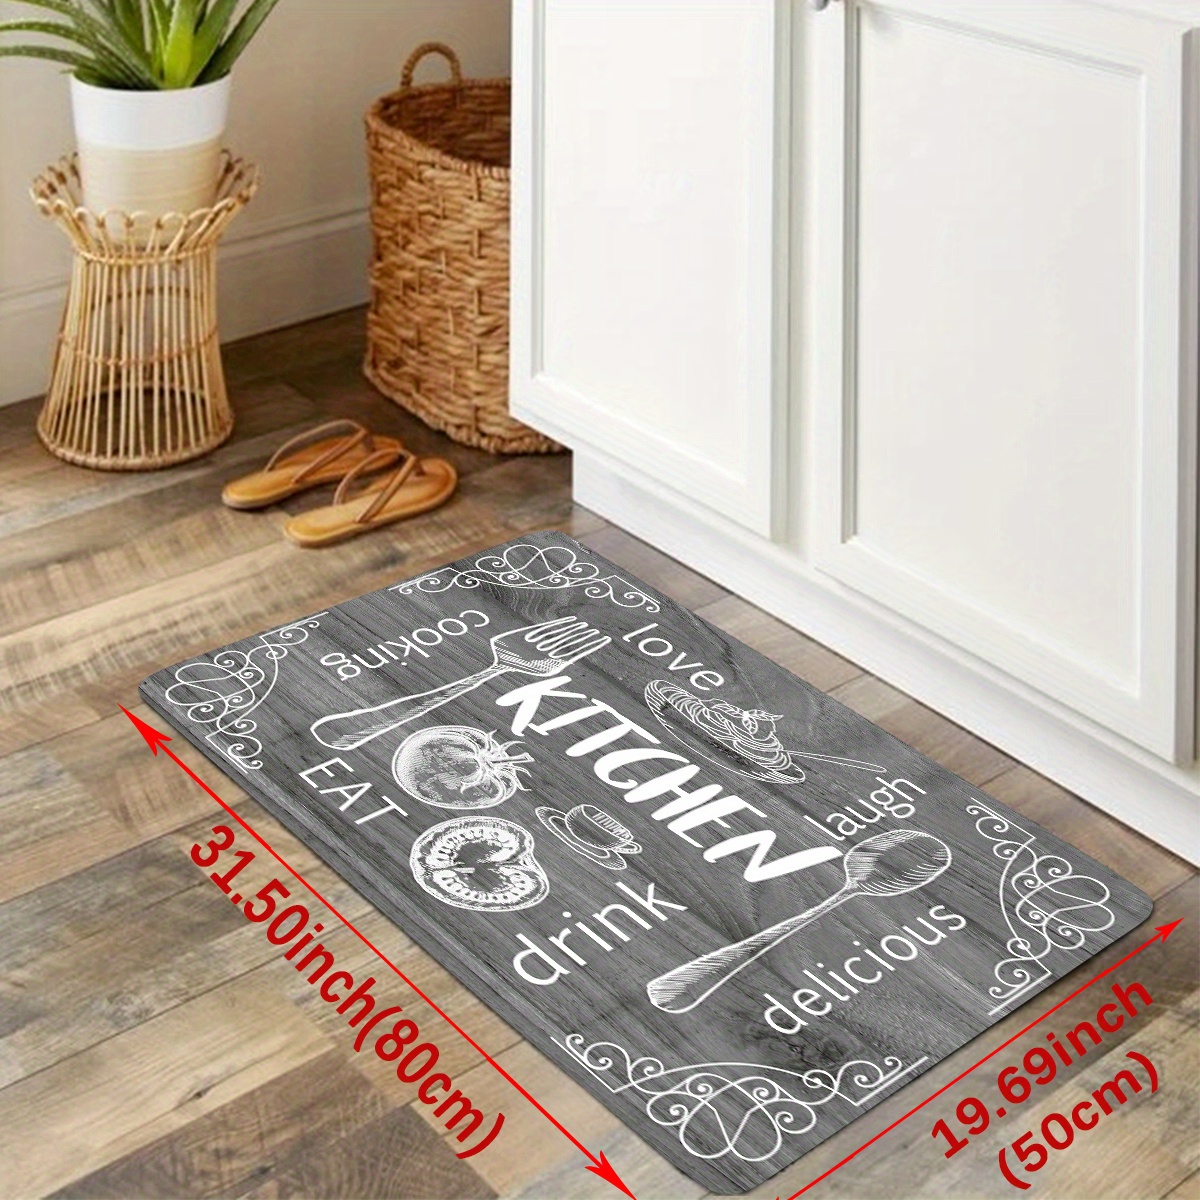 Super Absorbent kitchen floor mats